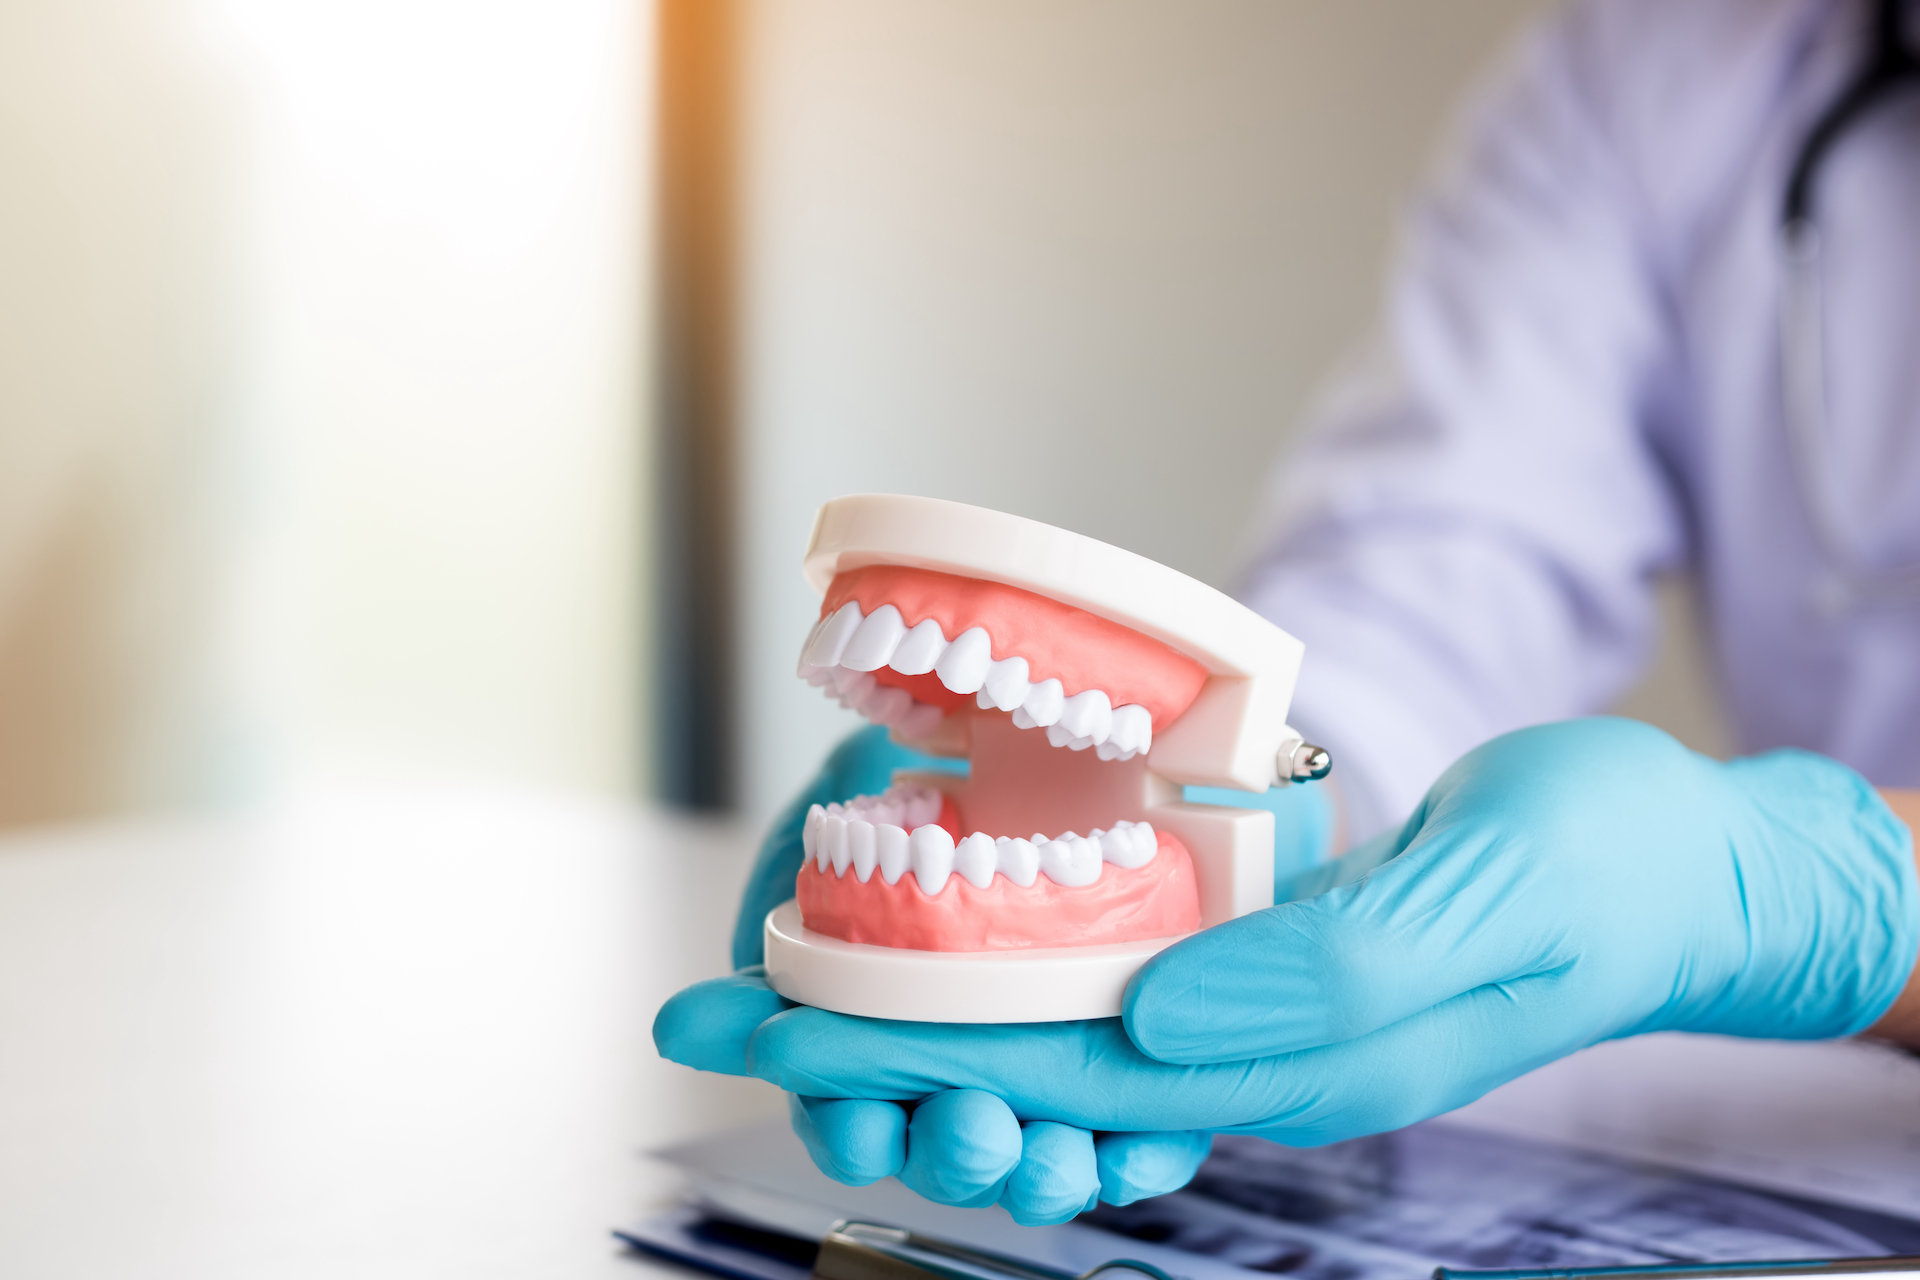 How Do You Treat Worn Down Teeth?